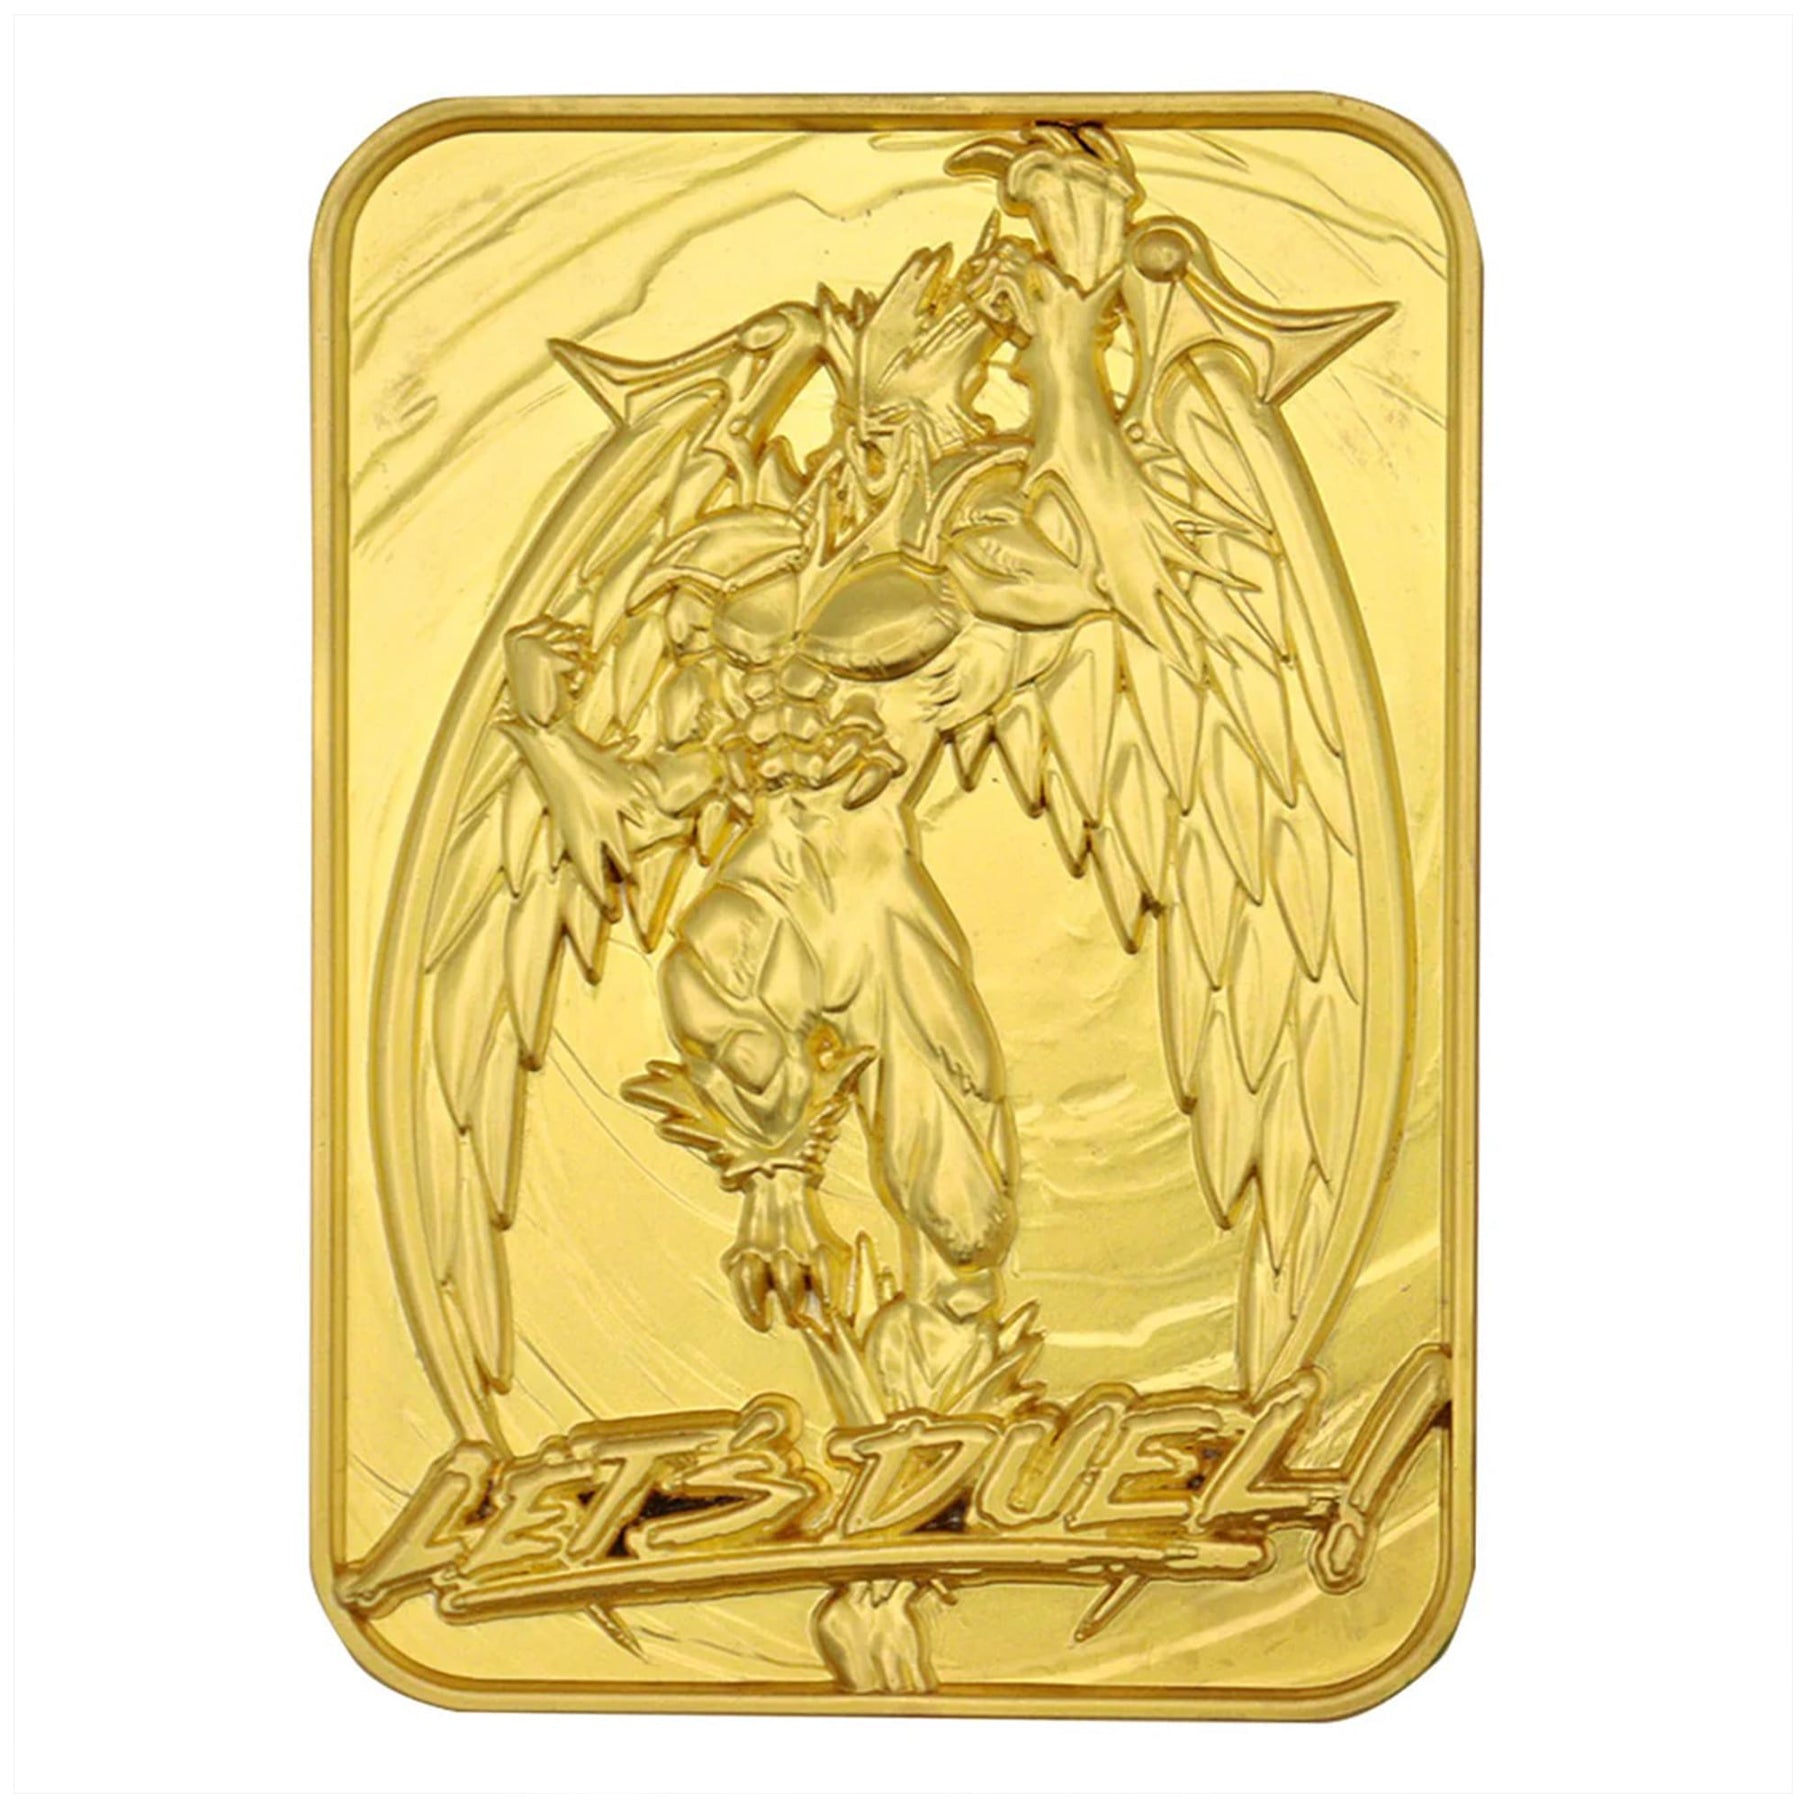 Yu-Gi-Oh! Elemental Hero Avian 24K Gold Plated Ingot